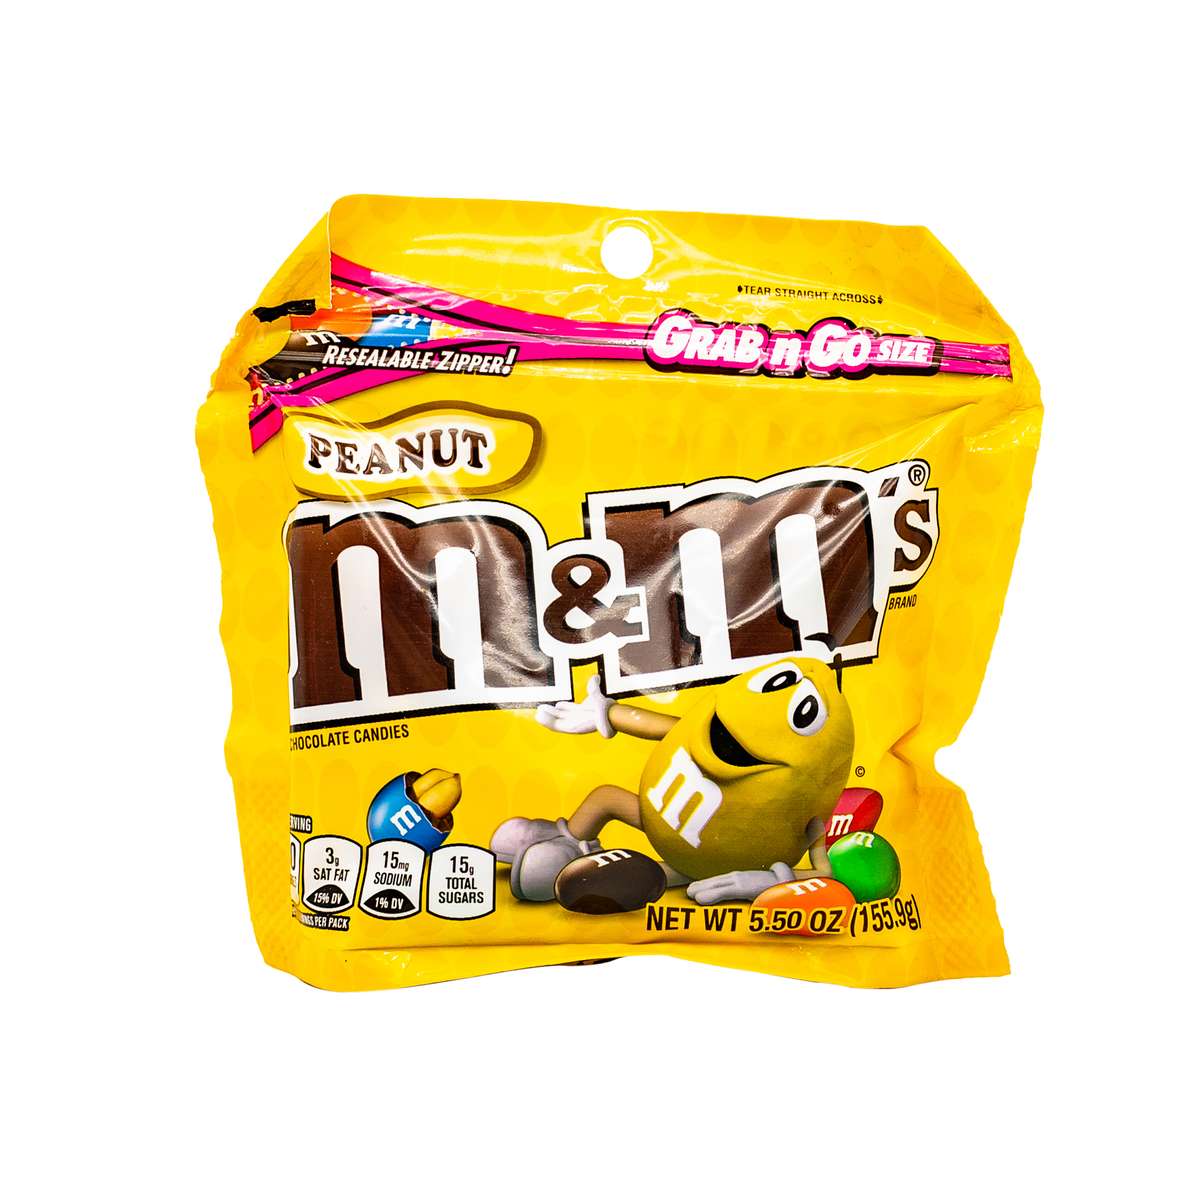 M&M's Chocolate Candies, Peanut, Grab N Go Size 5.5 Oz, Chocolate Candy